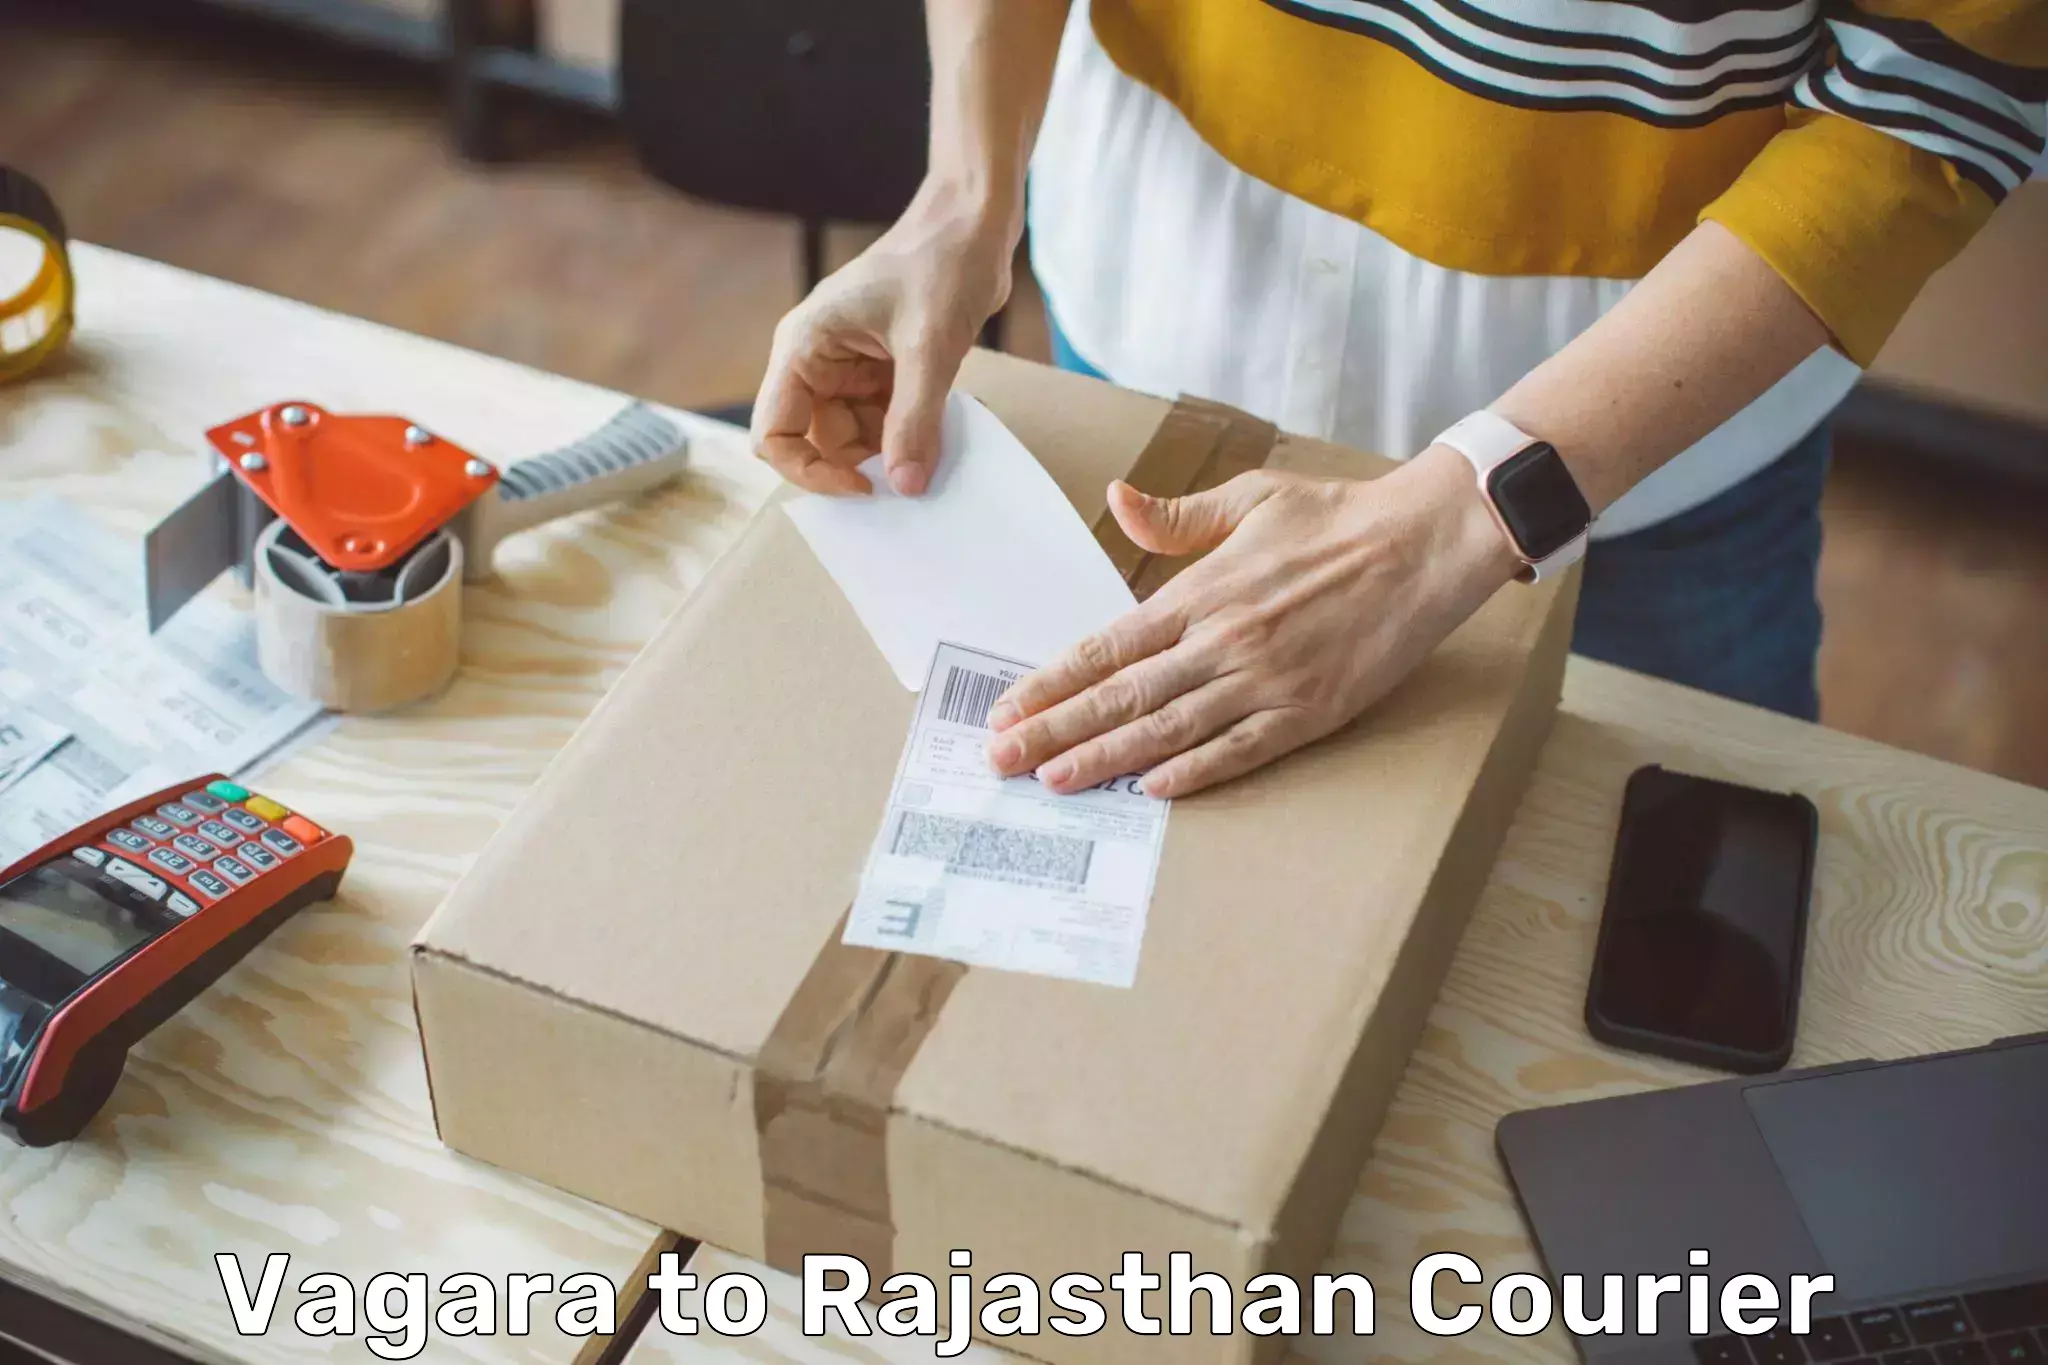 Courier service comparison in Vagara to Jaipur